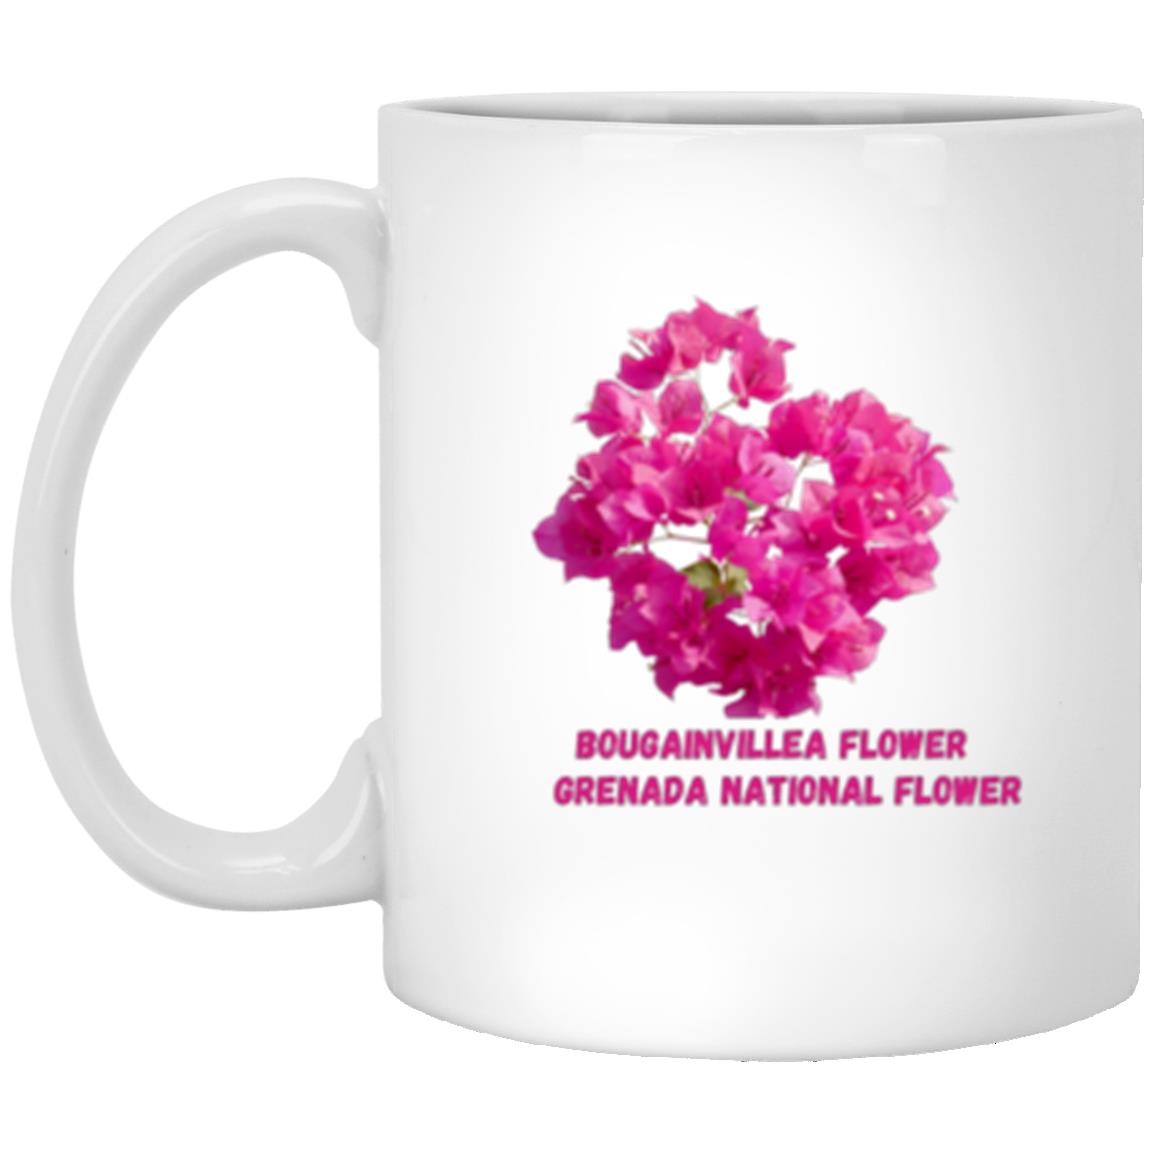 Grenada Isle of Spice National Flower Mug